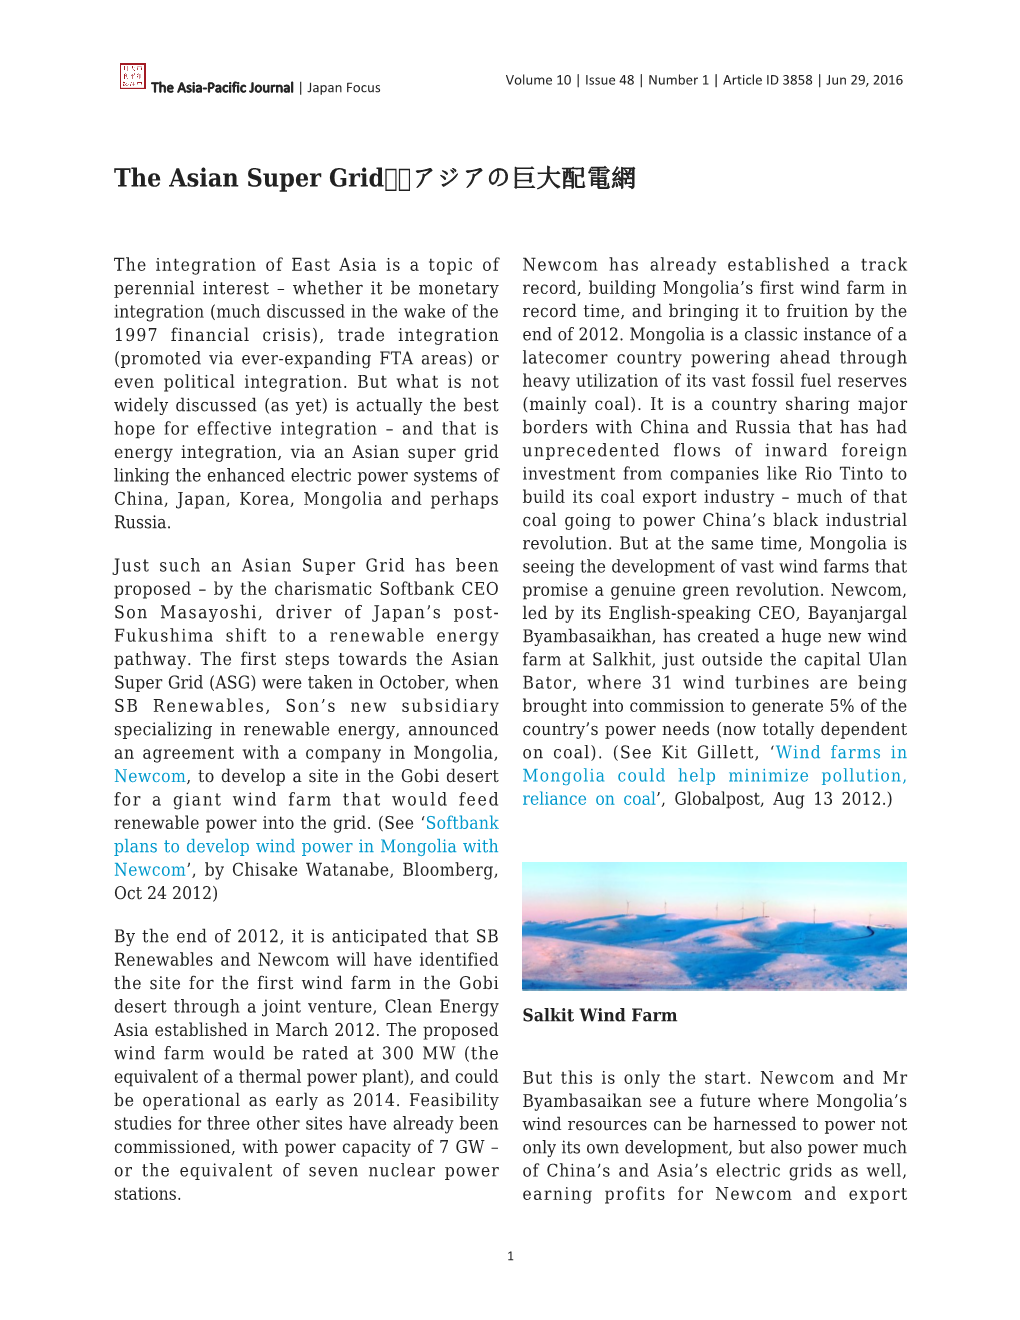 The Asian Super Grid アジアの巨大配電網